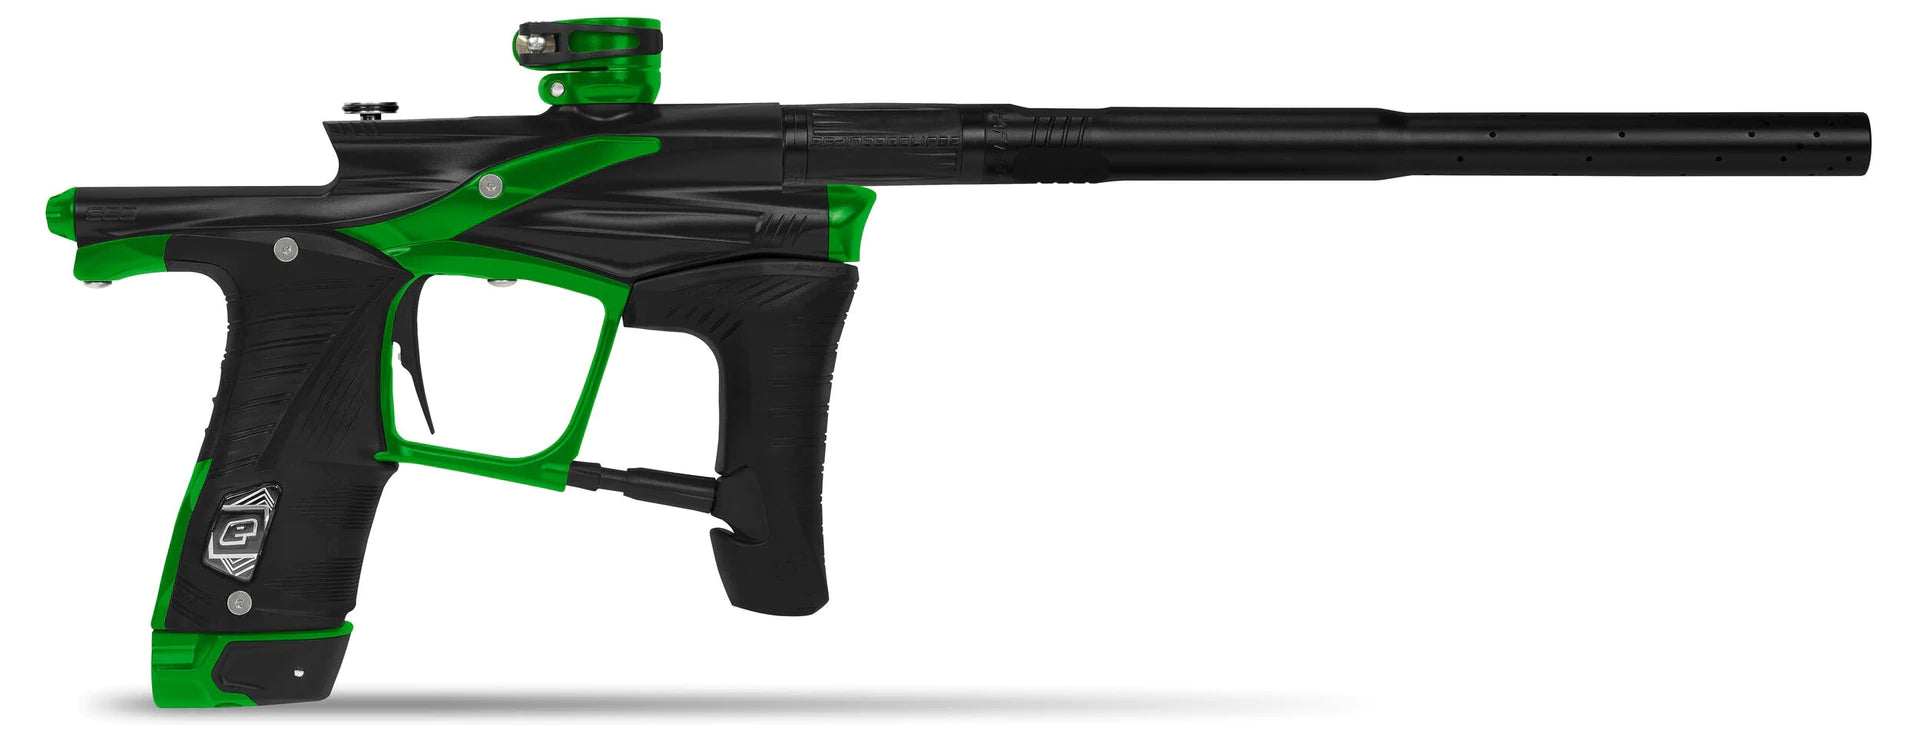 Planet Eclipse Ego LV1.6 Paintball Gun - Midnight Series - Black/Green